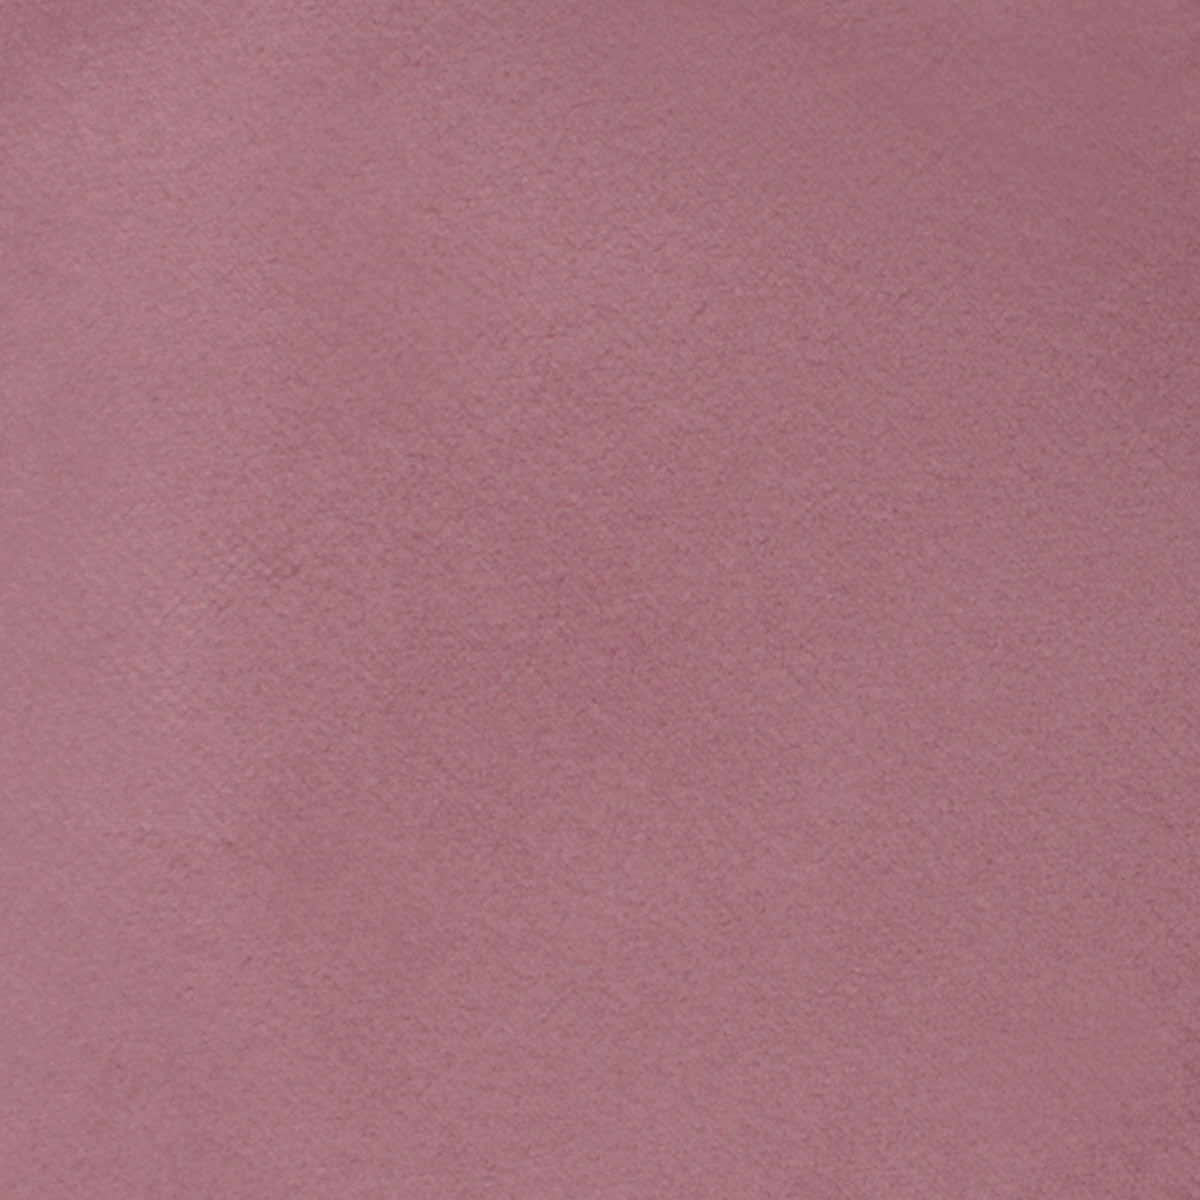 Nude Pink Velvet Fabric Bow Tie